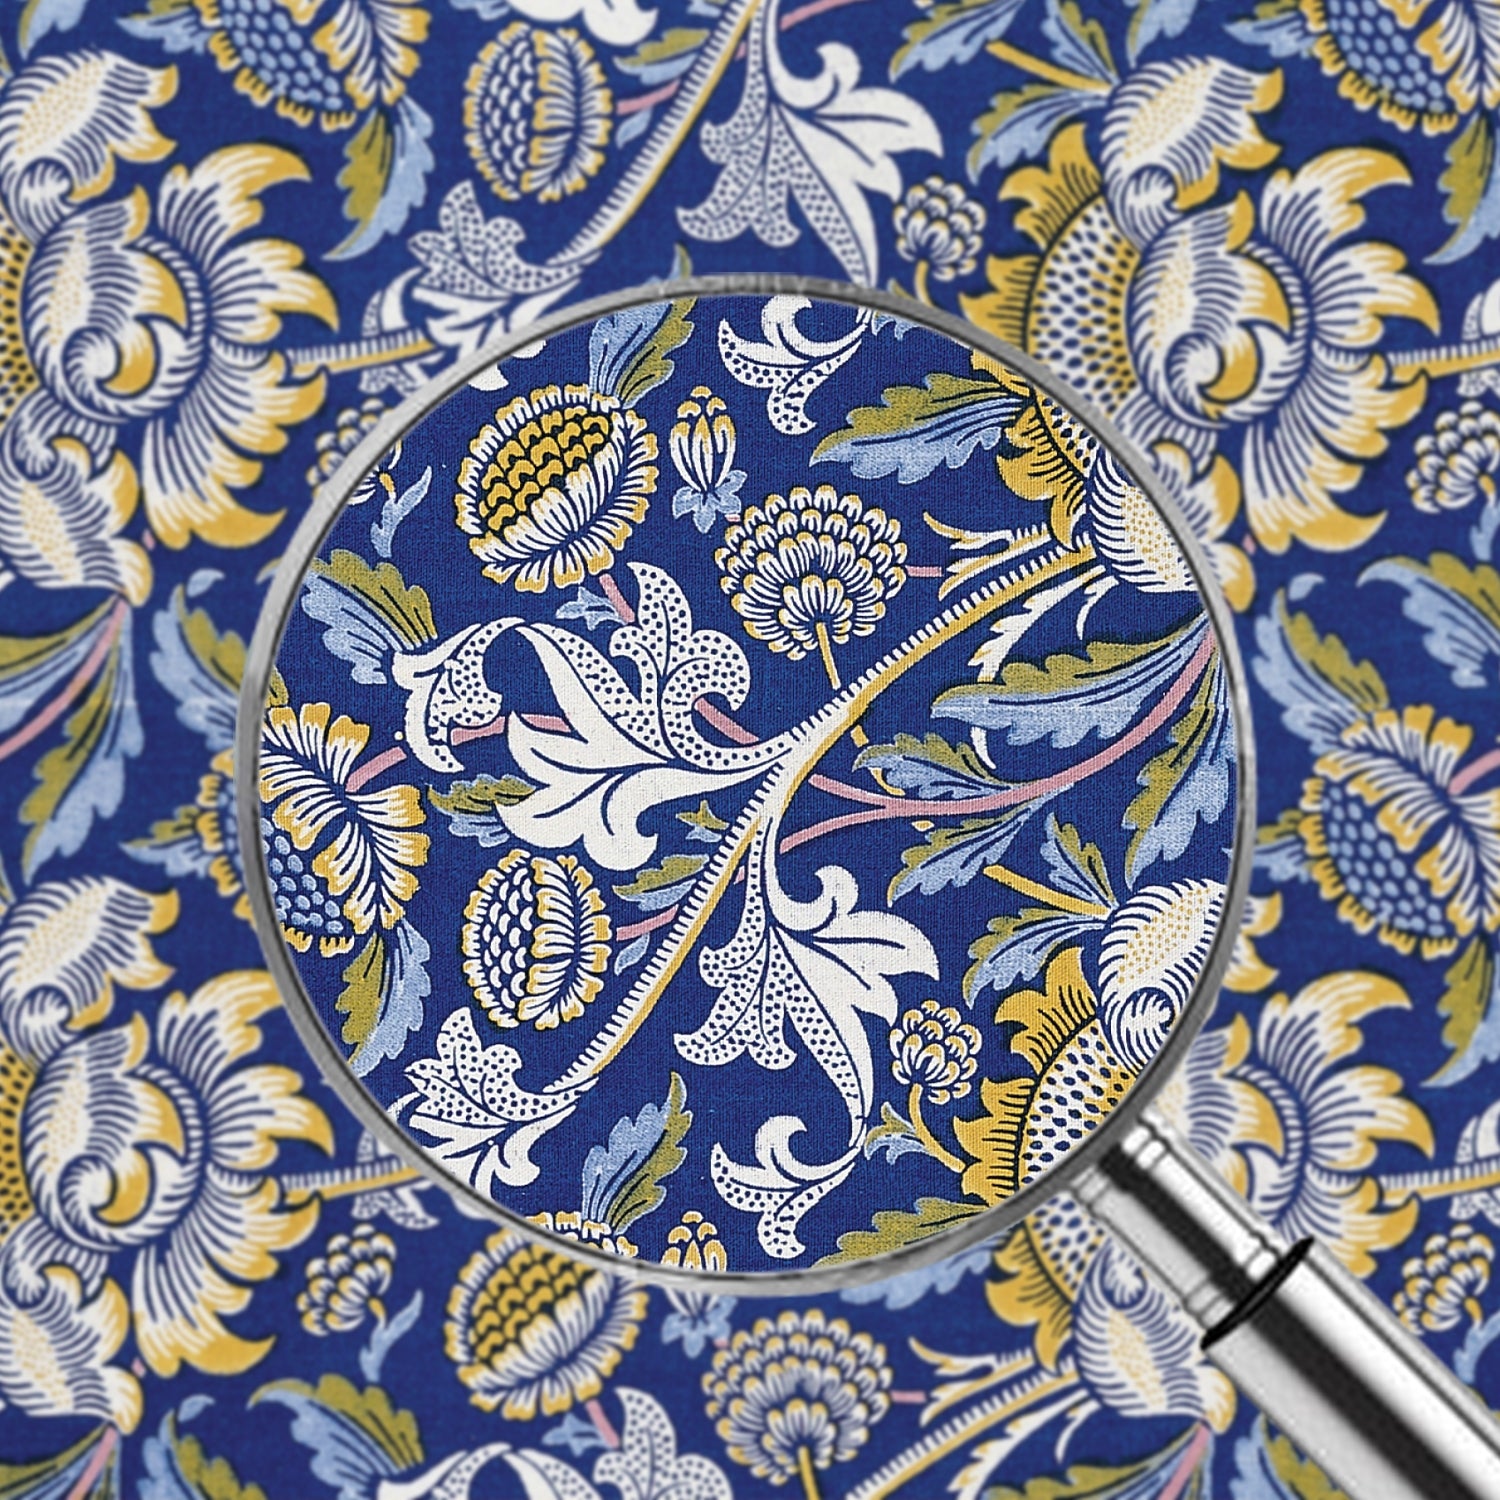 Classic William Morris Pattern Vintage Decorative Paper6